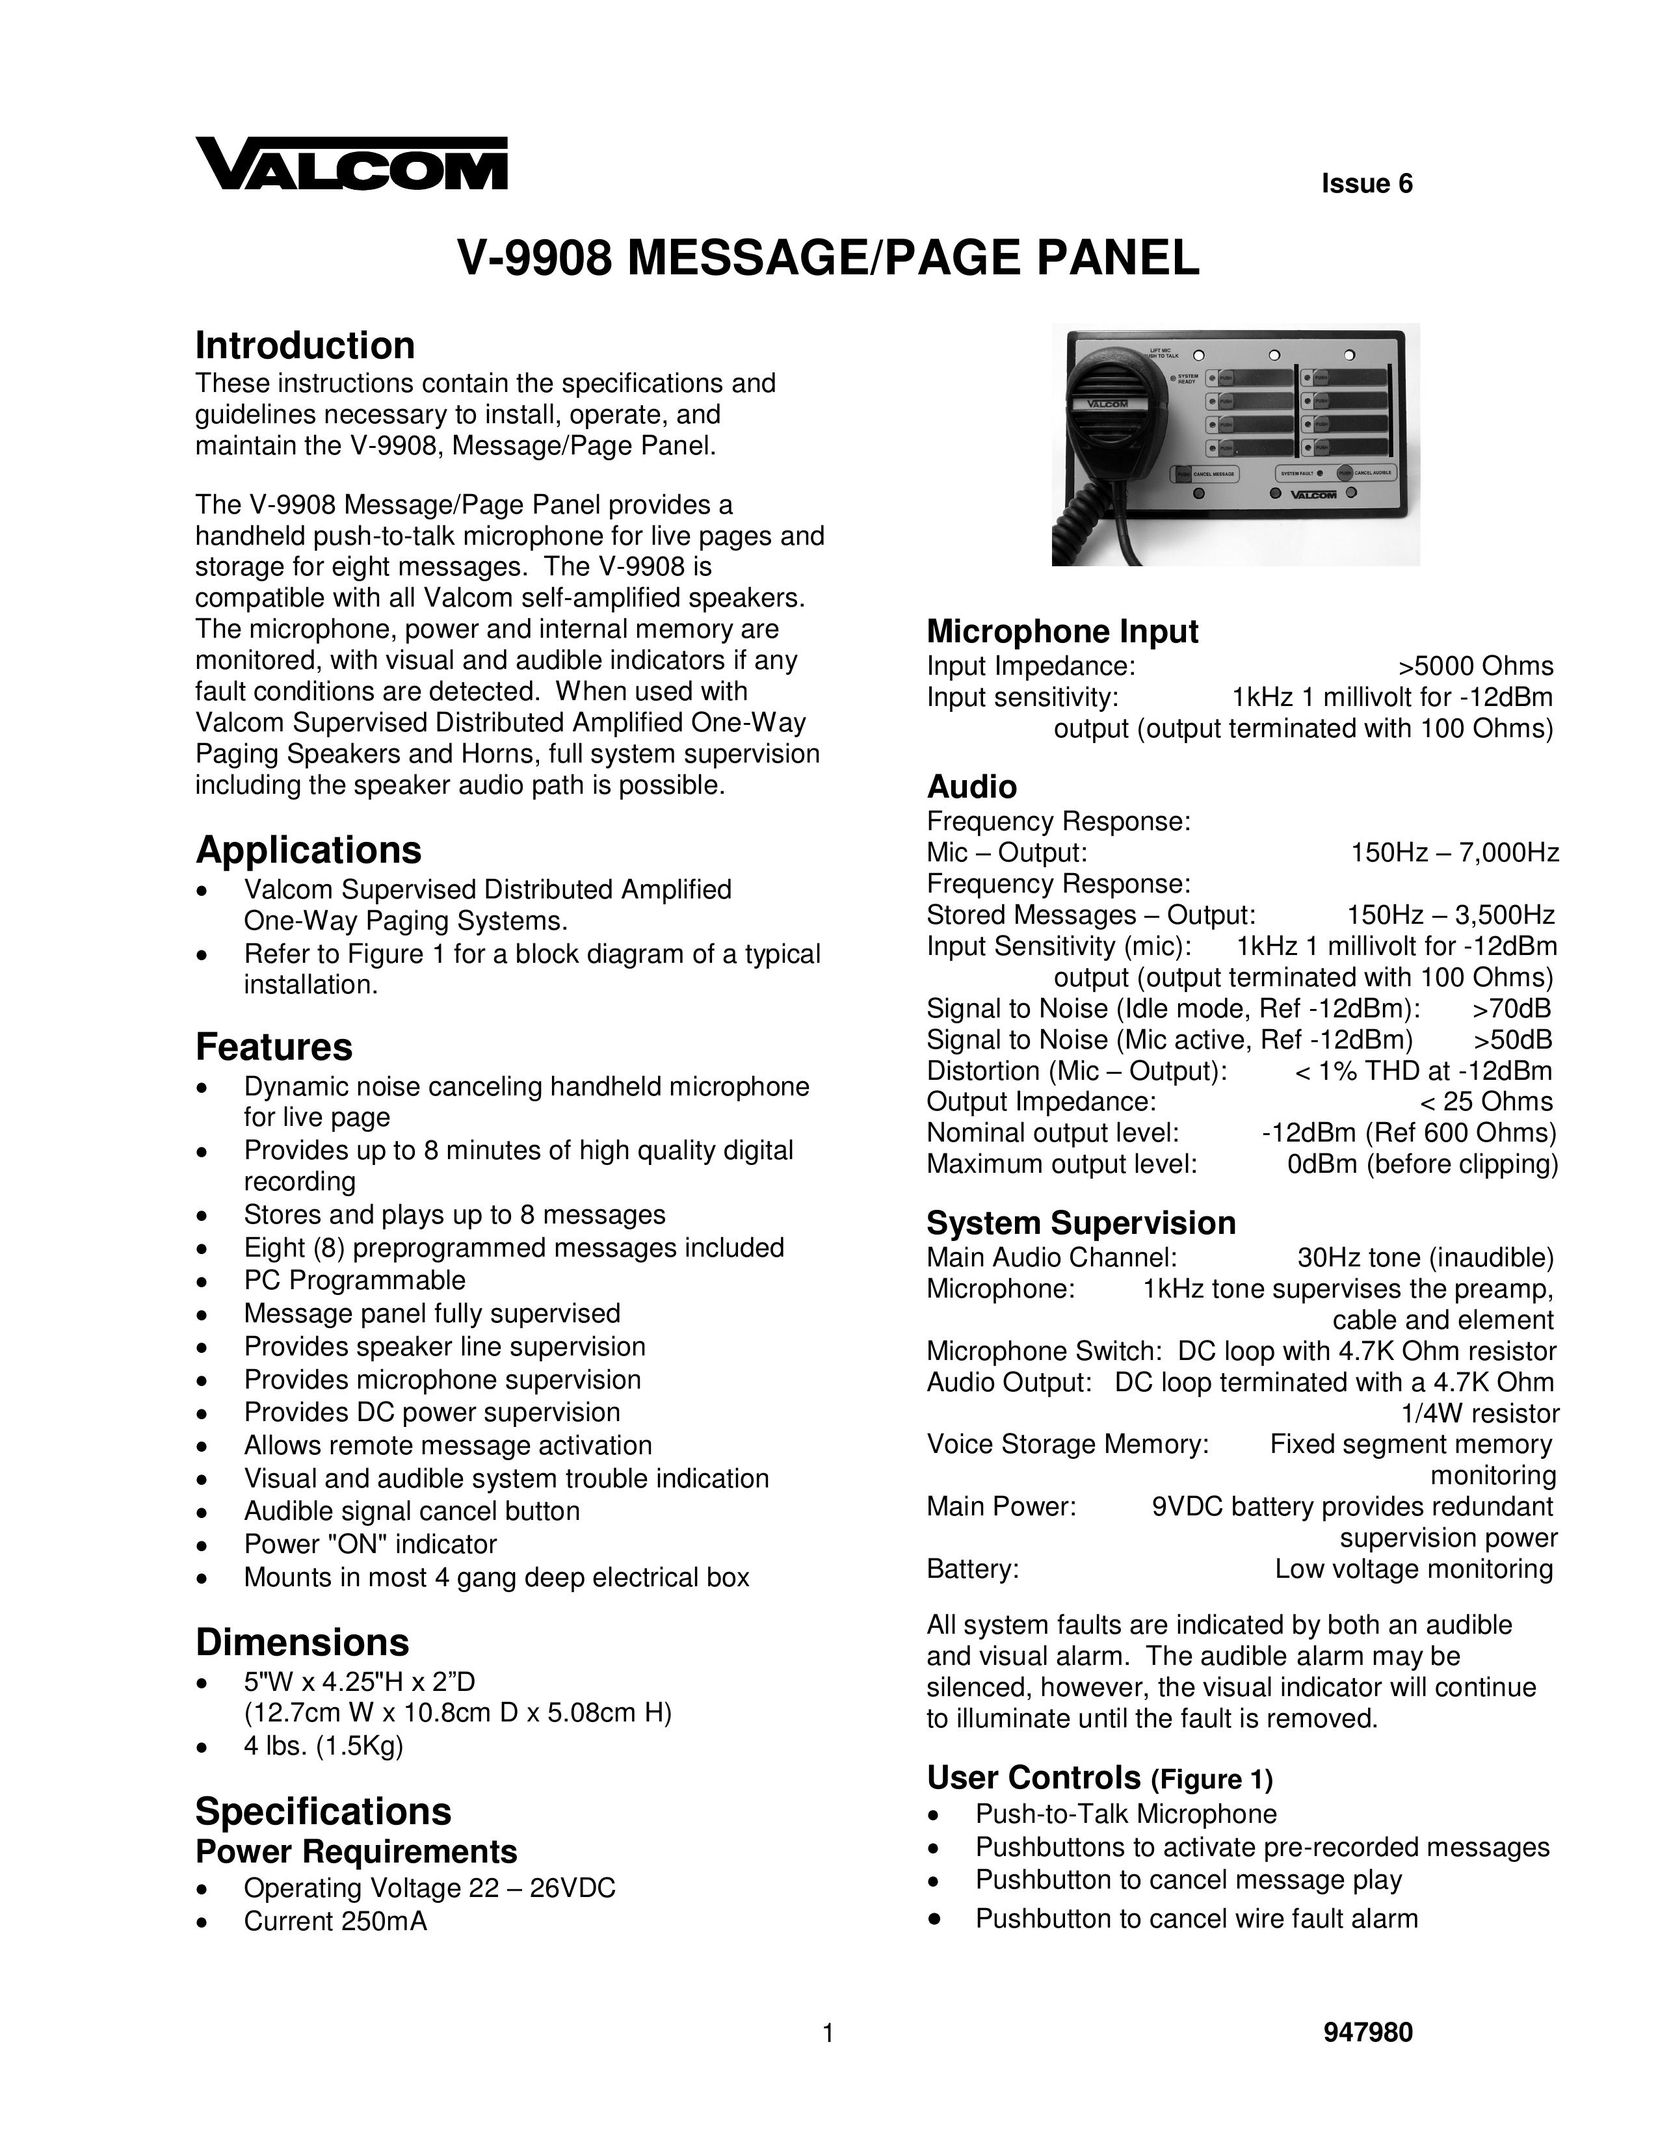 Valcom V-9908 Pager User Manual